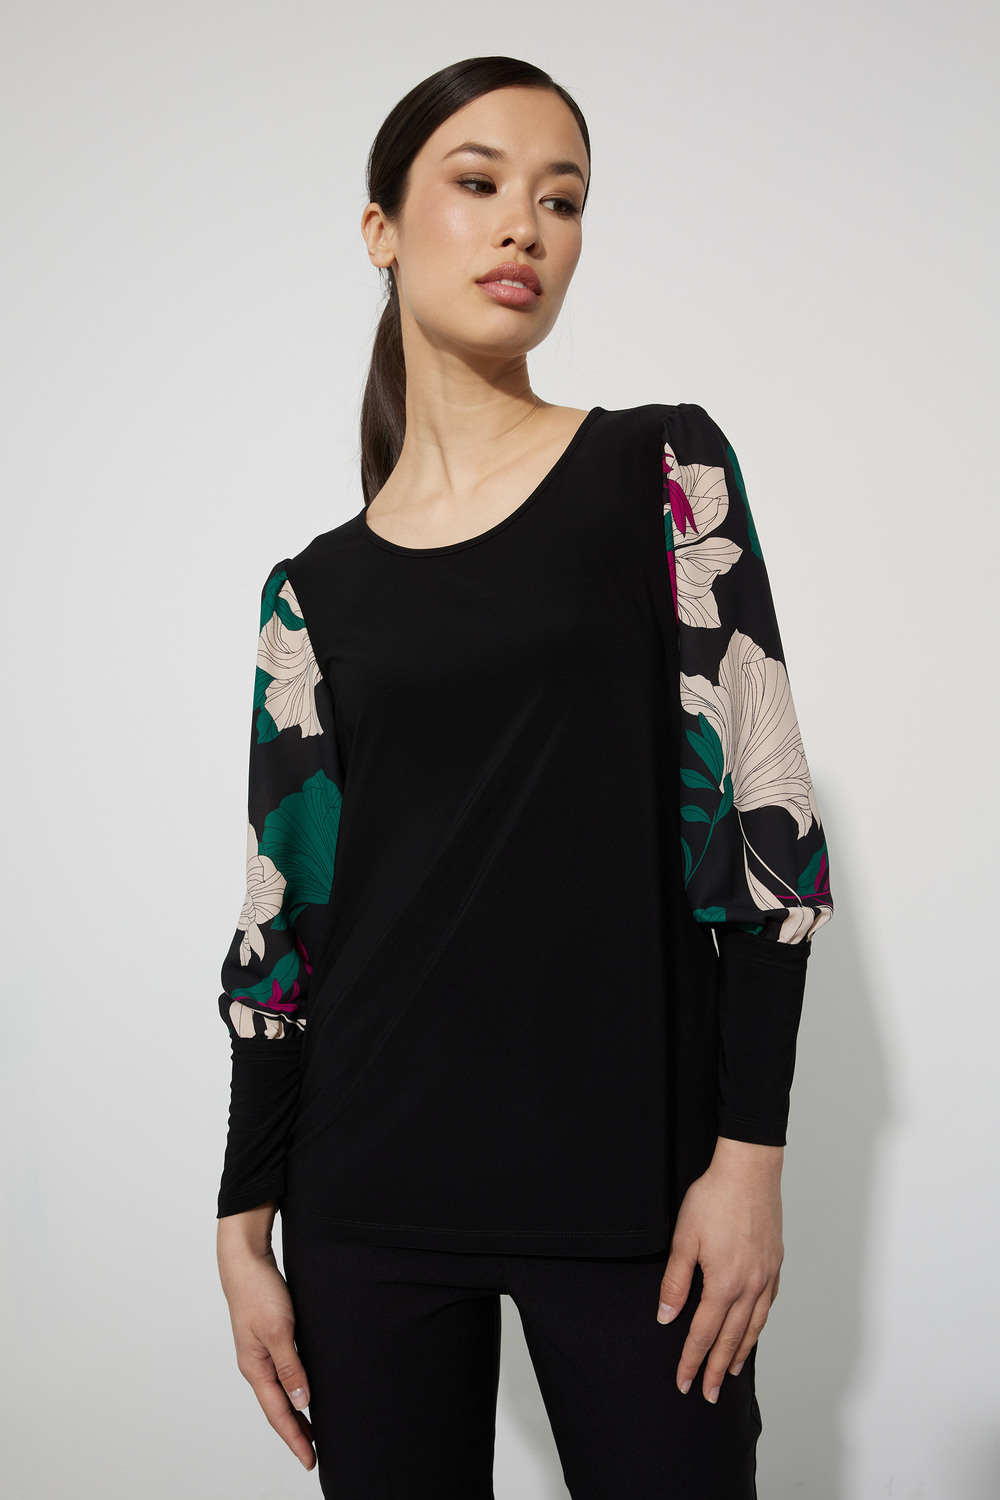 Joseph Ribkoff Floral Sleeve Top Style 223253. Black/multi